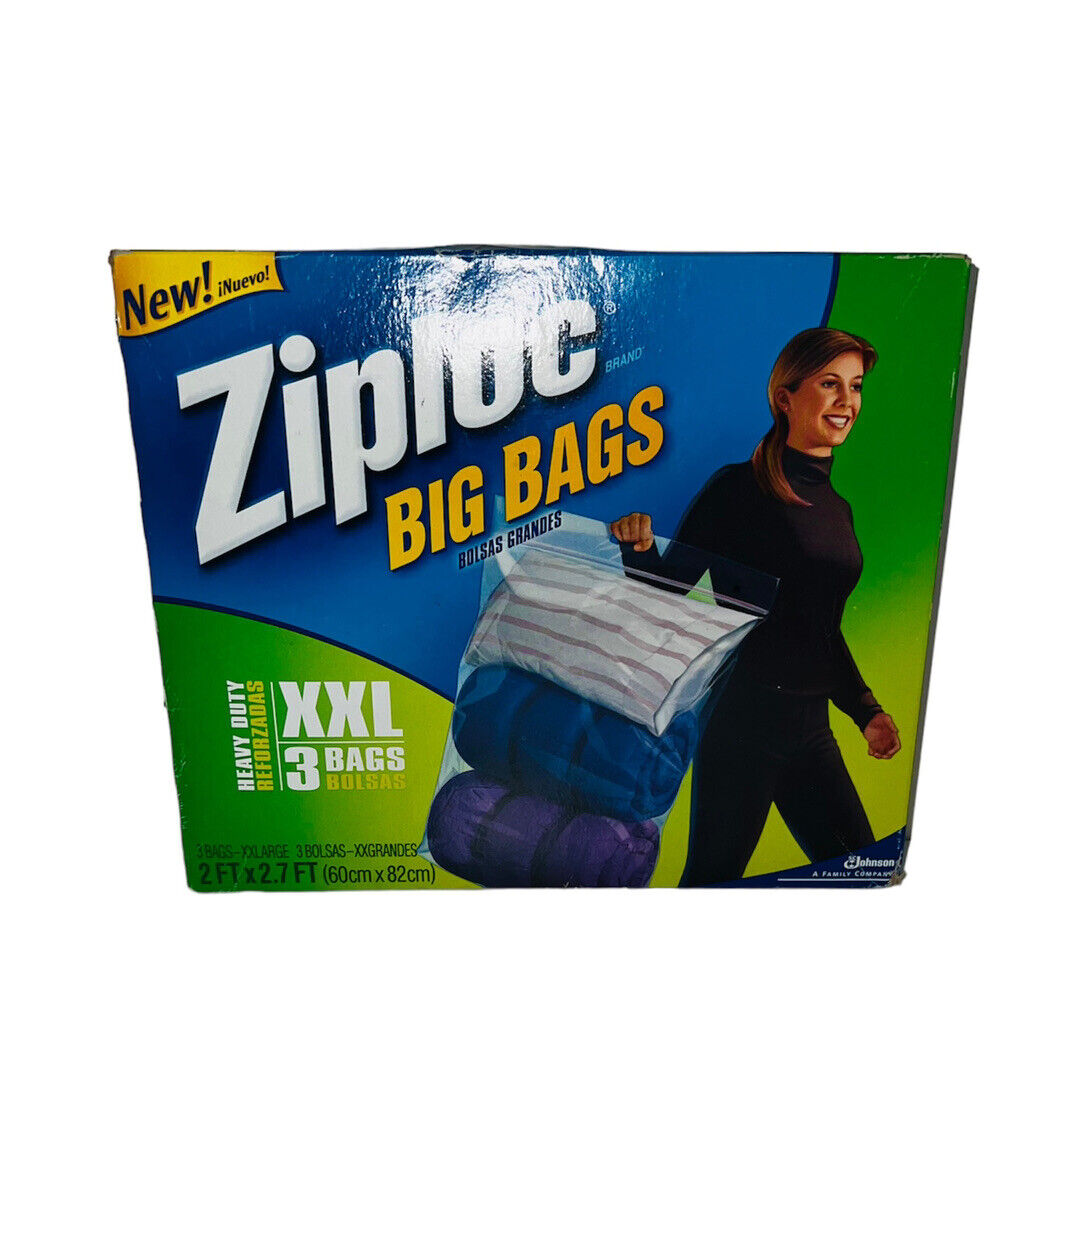 Ziploc Big Bags XXL 20 Gallon 3 Pack 2' x 2.7' Double Zipper Sturdy Handle  25700656456